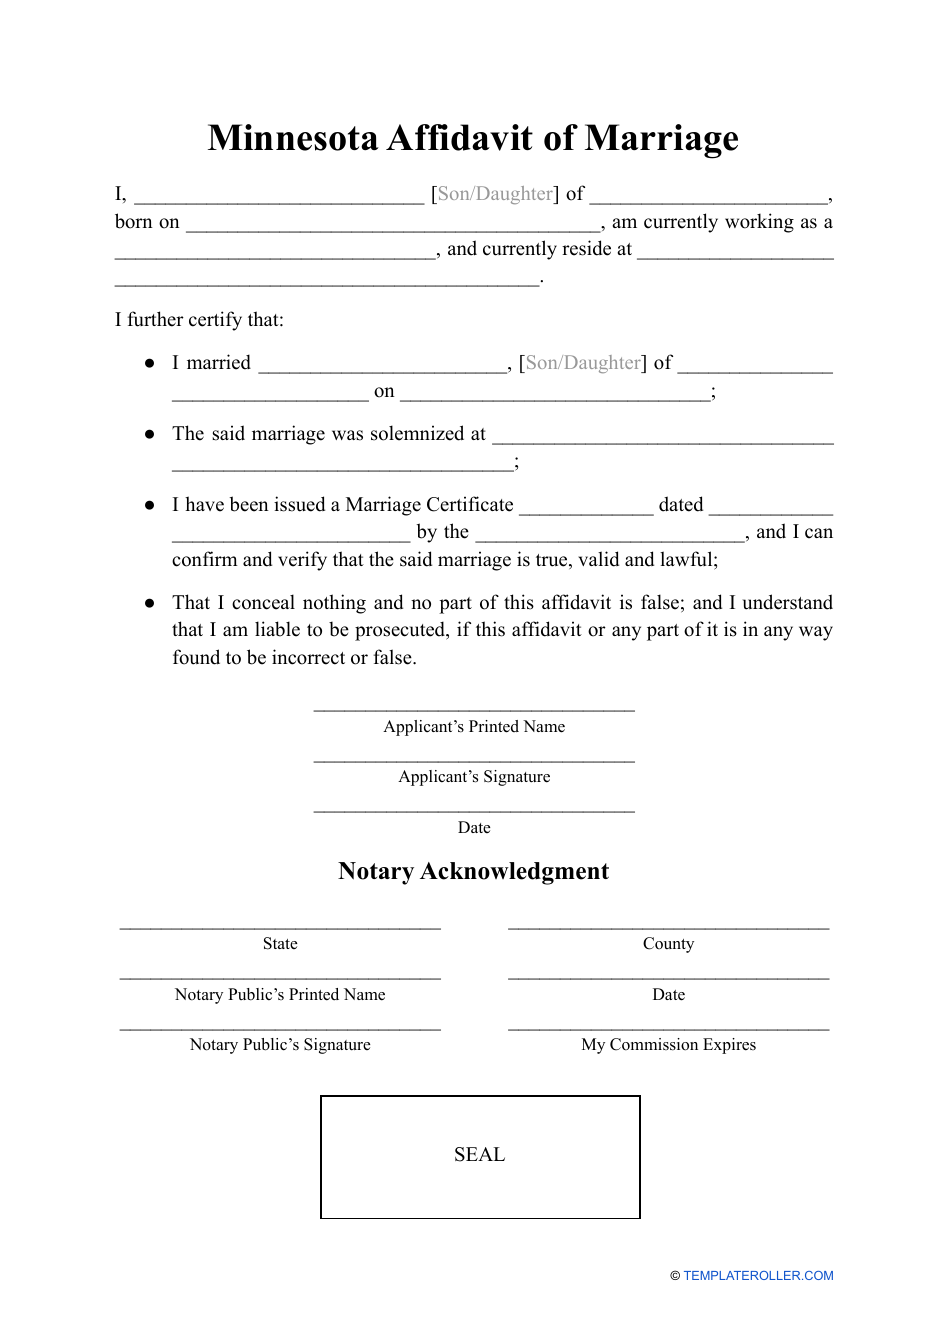 Affidavit of Marriage - Minnesota, Page 1